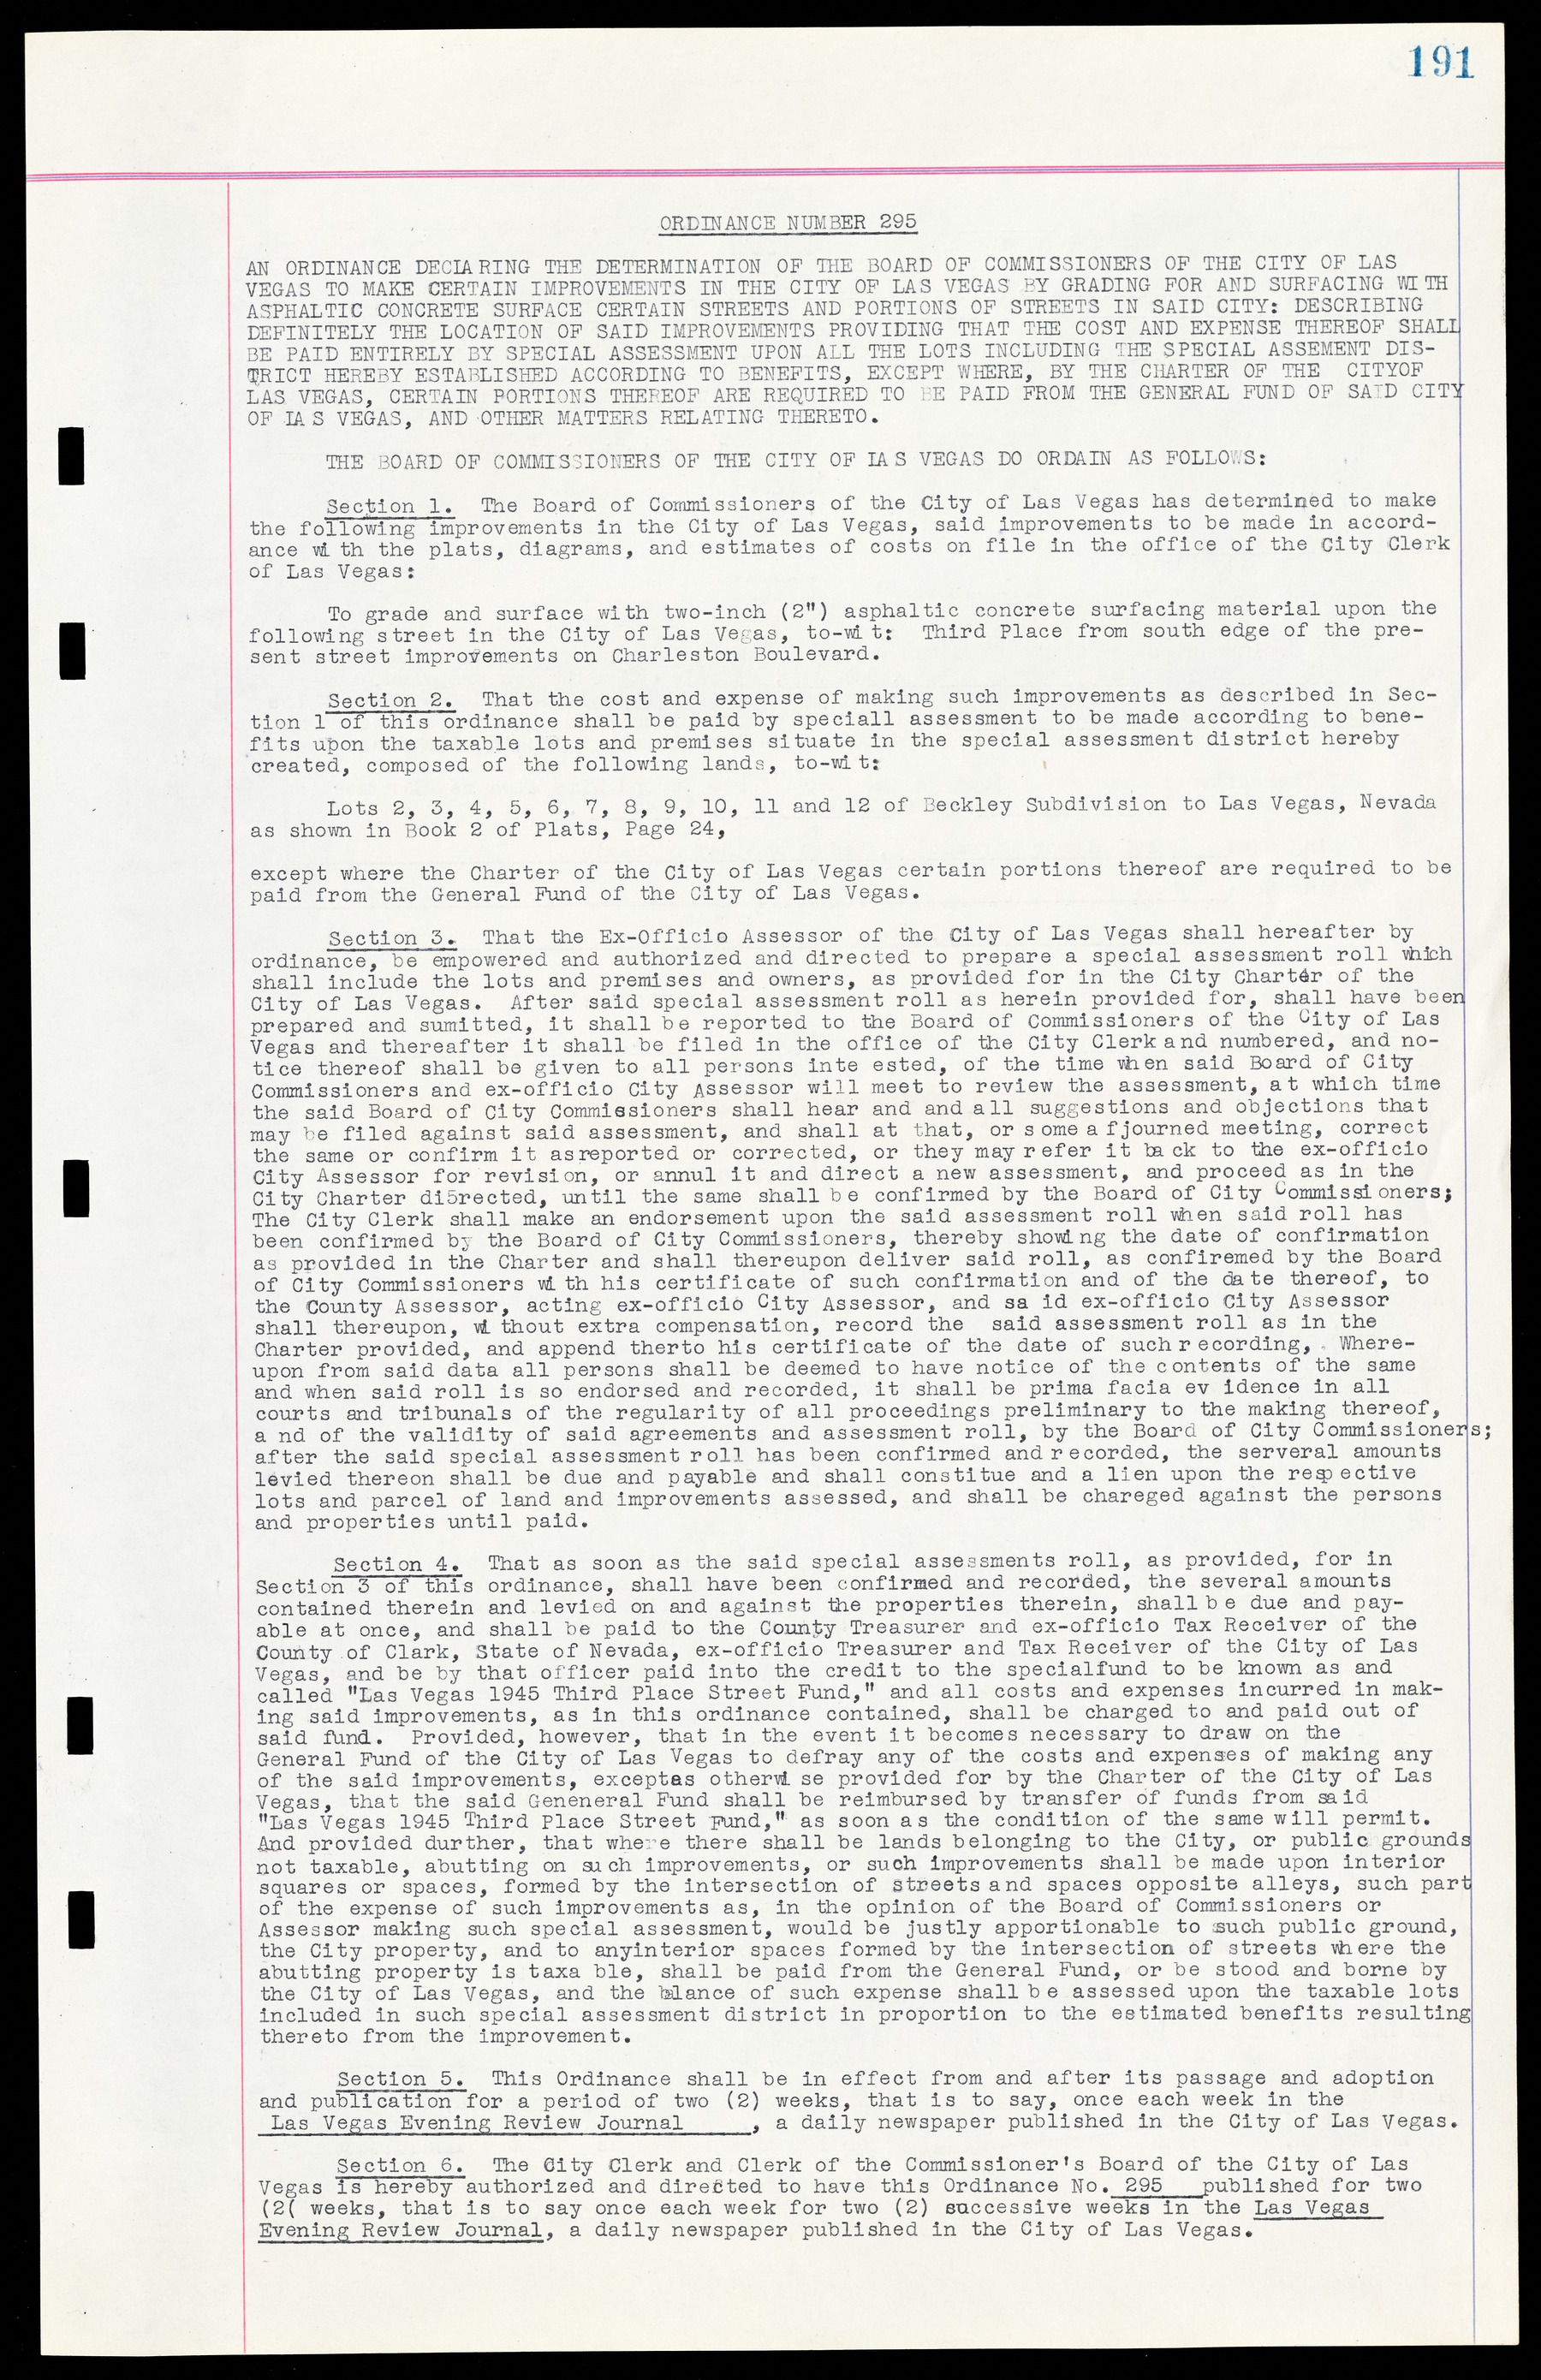 Las Vegas City Ordinances, March 31, 1933 to October 25, 1950, lvc000014-216